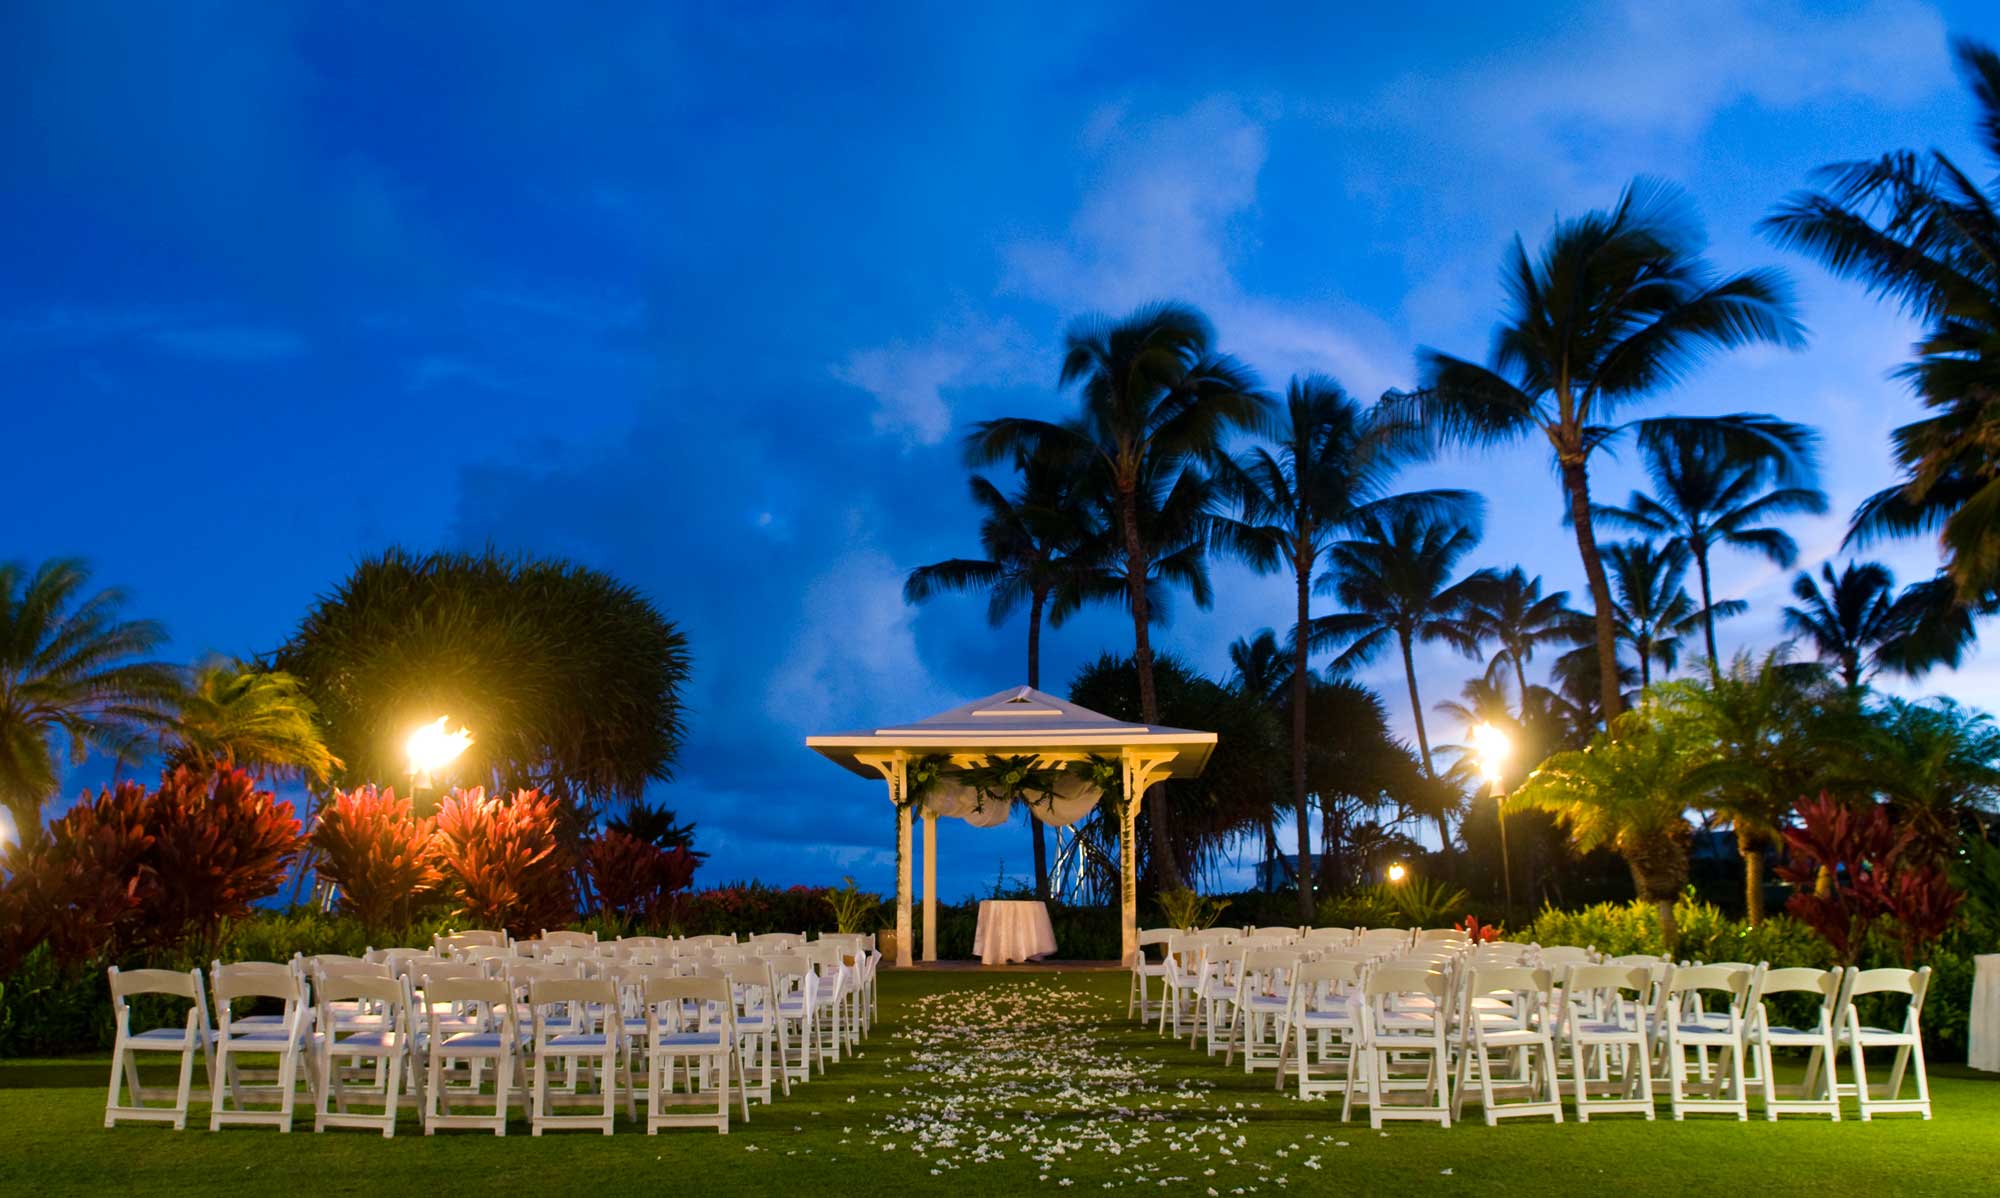 Hawaii island wedding venue: Grand Hyatt Kauai Resort and Spa